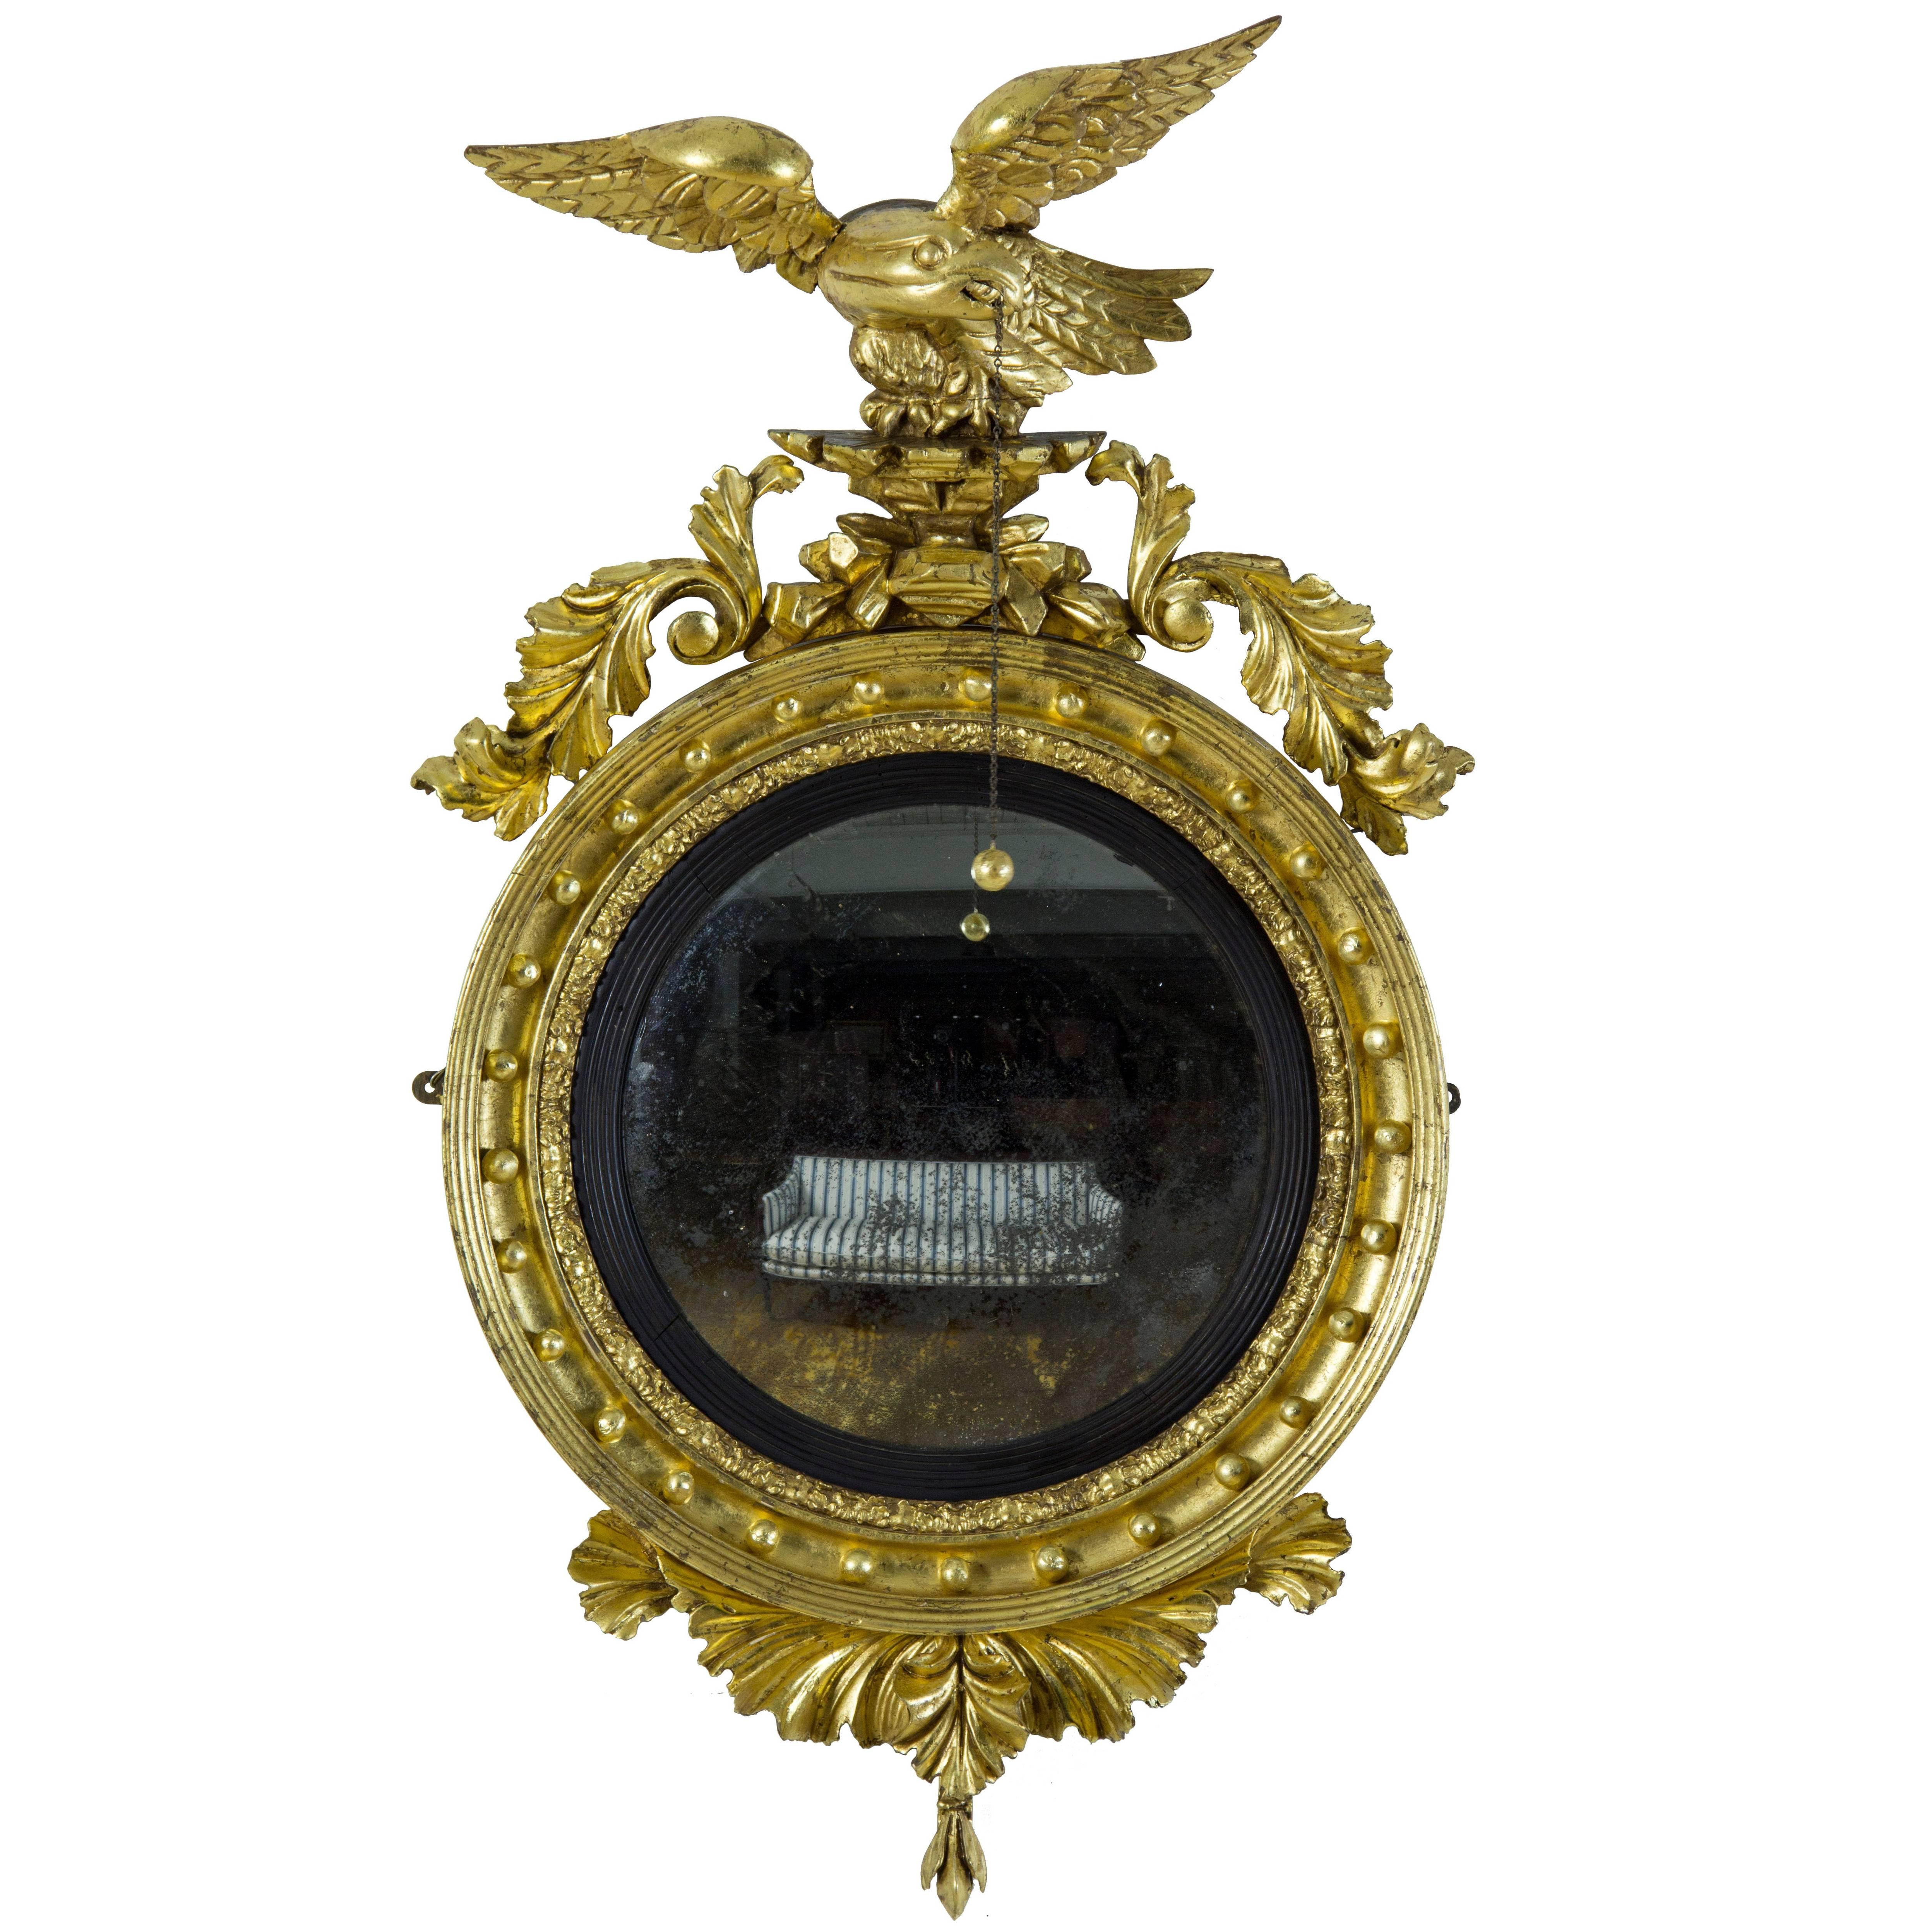 Classical Giltwood Girandole Mirror or Carved Eagle, English or American